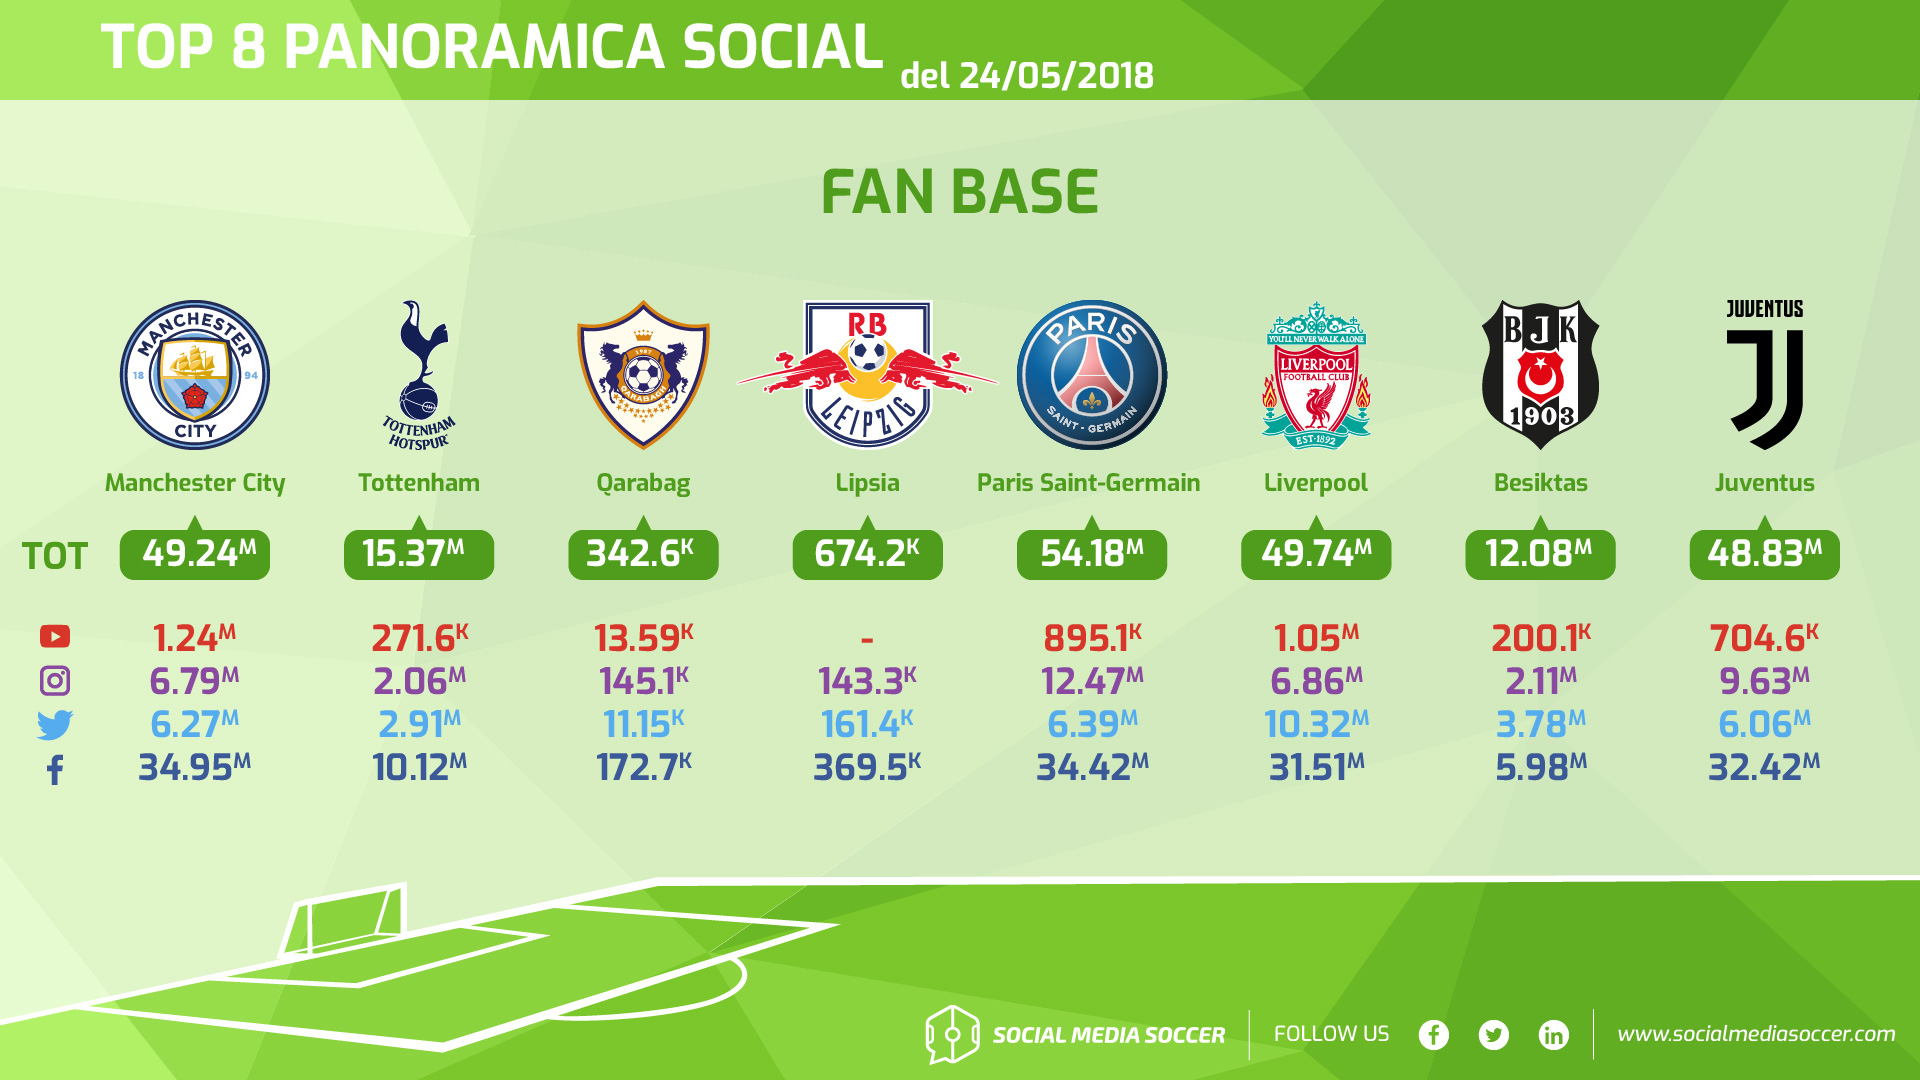 Incrementi social Champions League 2017/2018